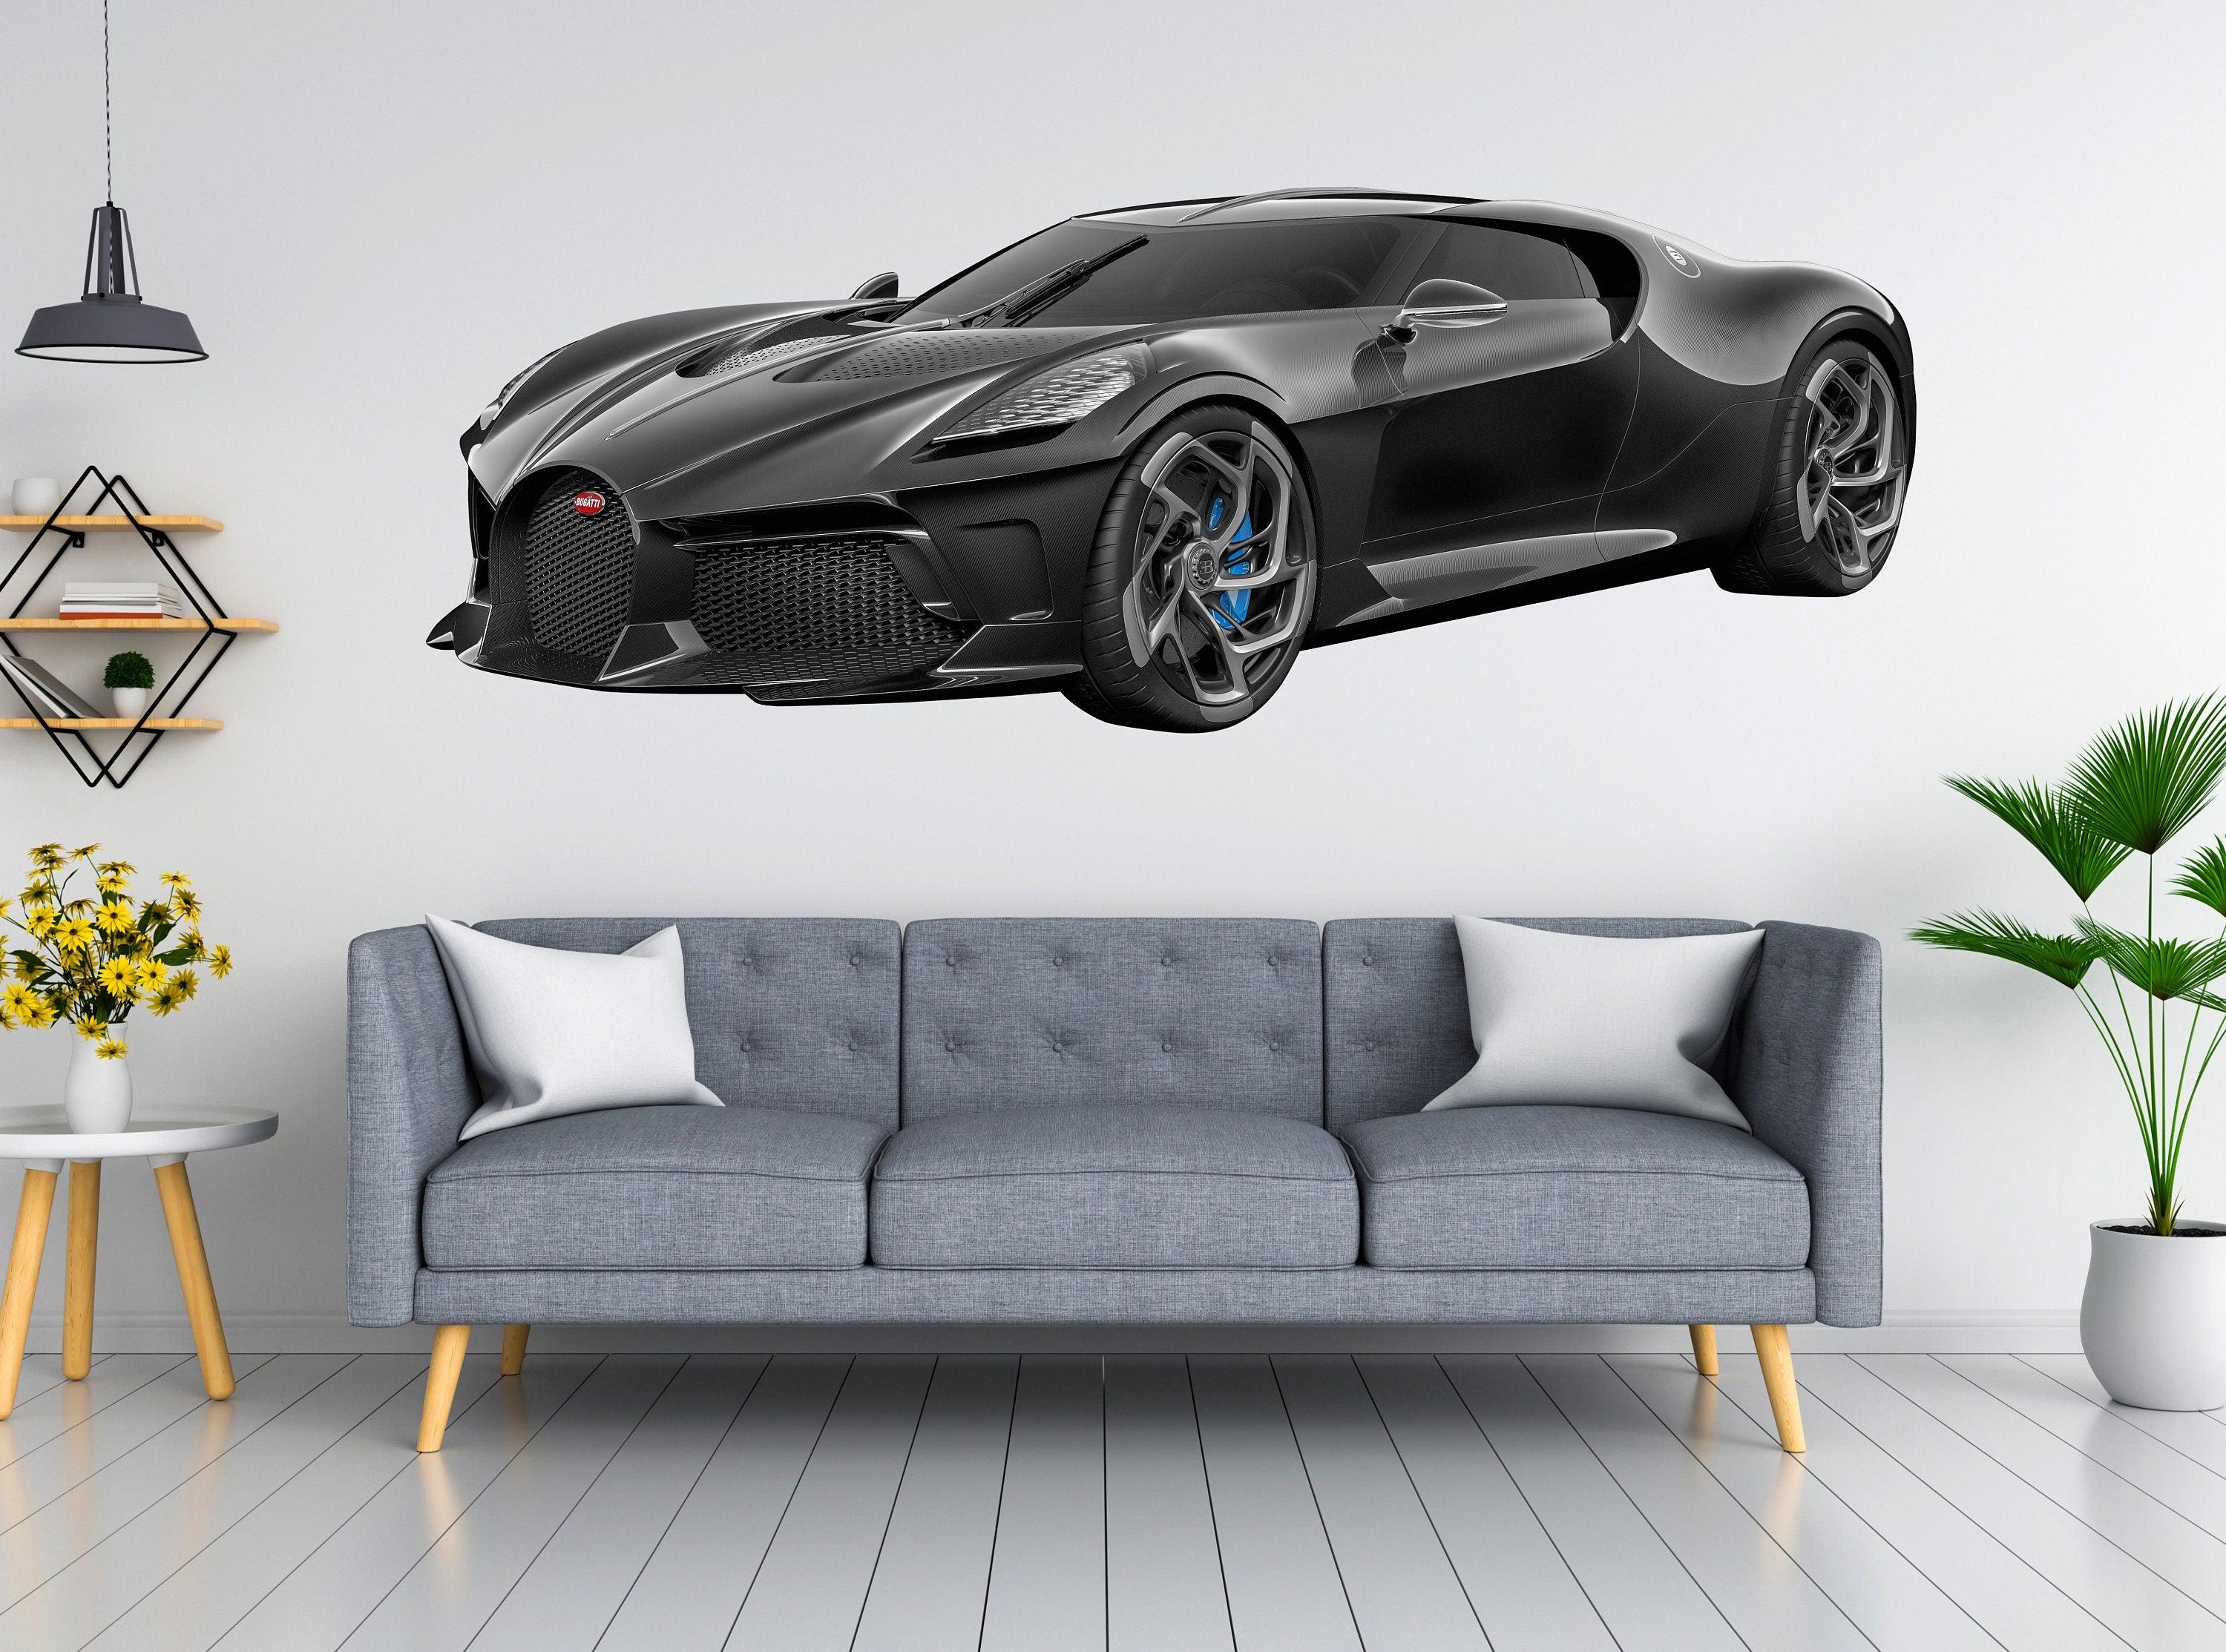 Bugatti la voiture noire 2019 Wall Decal sticker Peel-N-Stick wall decor 043